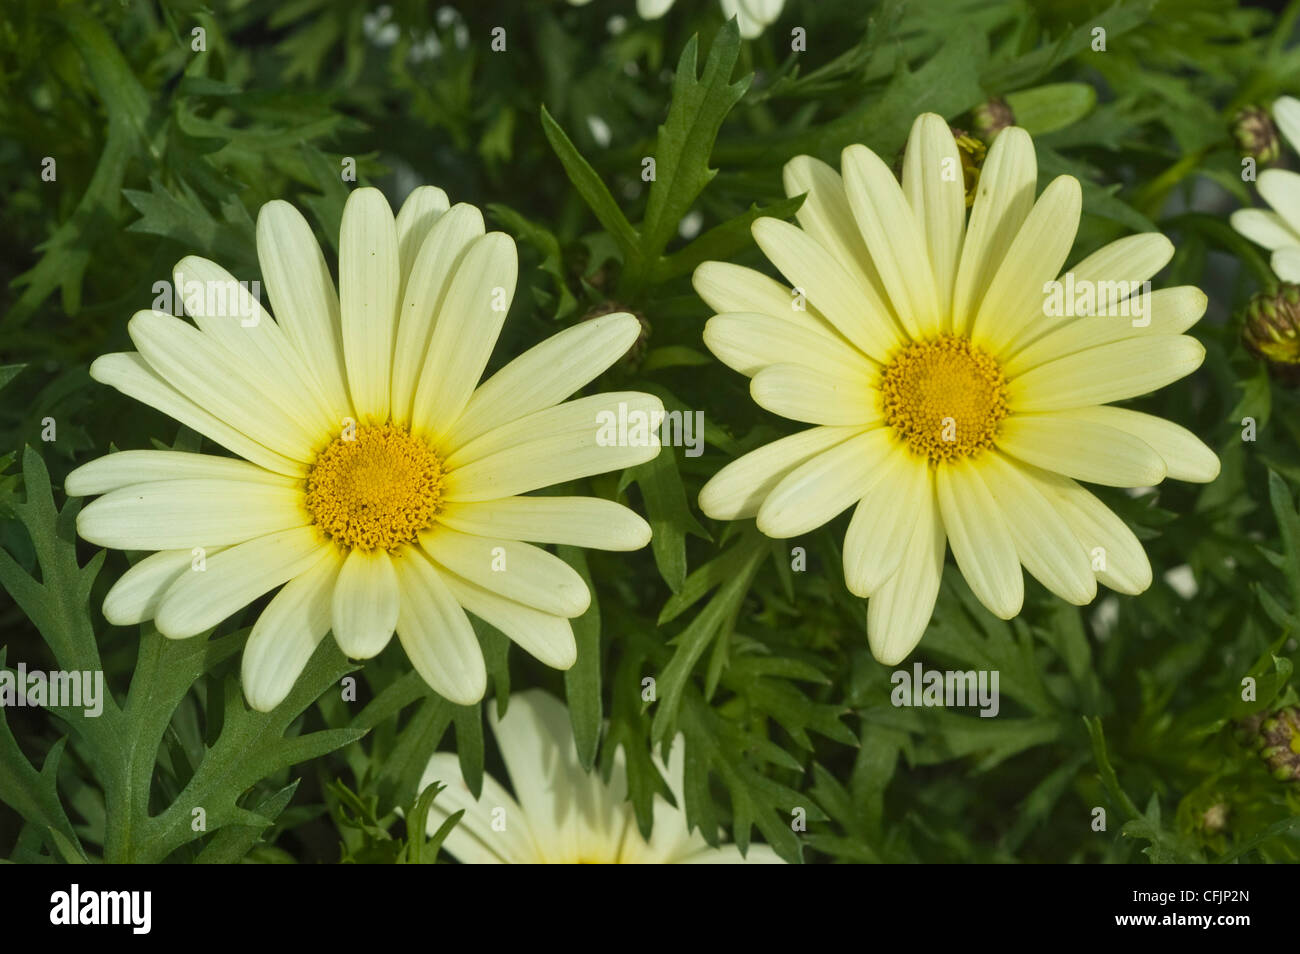 White yellow two flowers of Marguerite Daisy var. Vanilla Butterfly, Argyranthemum frutescens Stock Photo